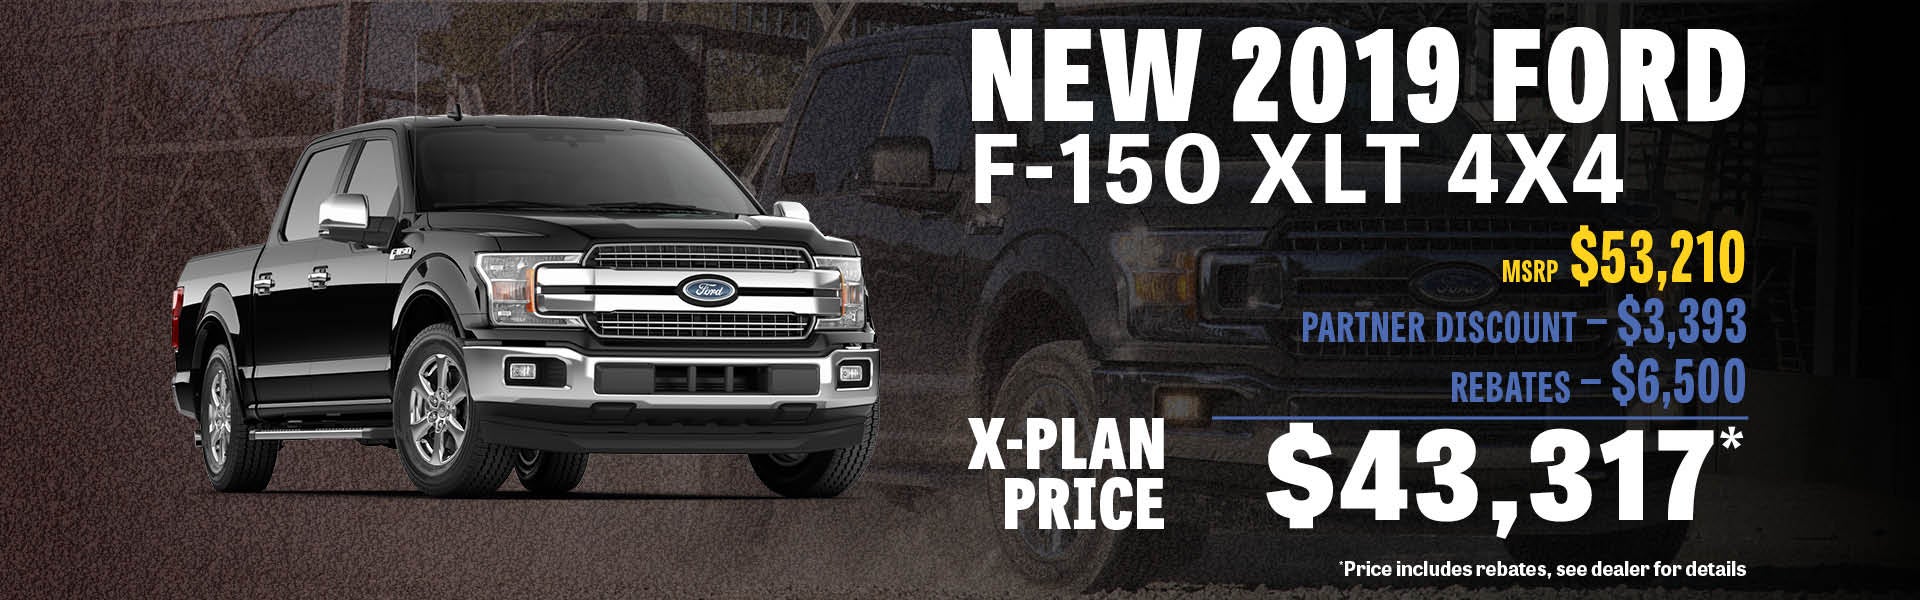 Hunt Ford X-Plan Price